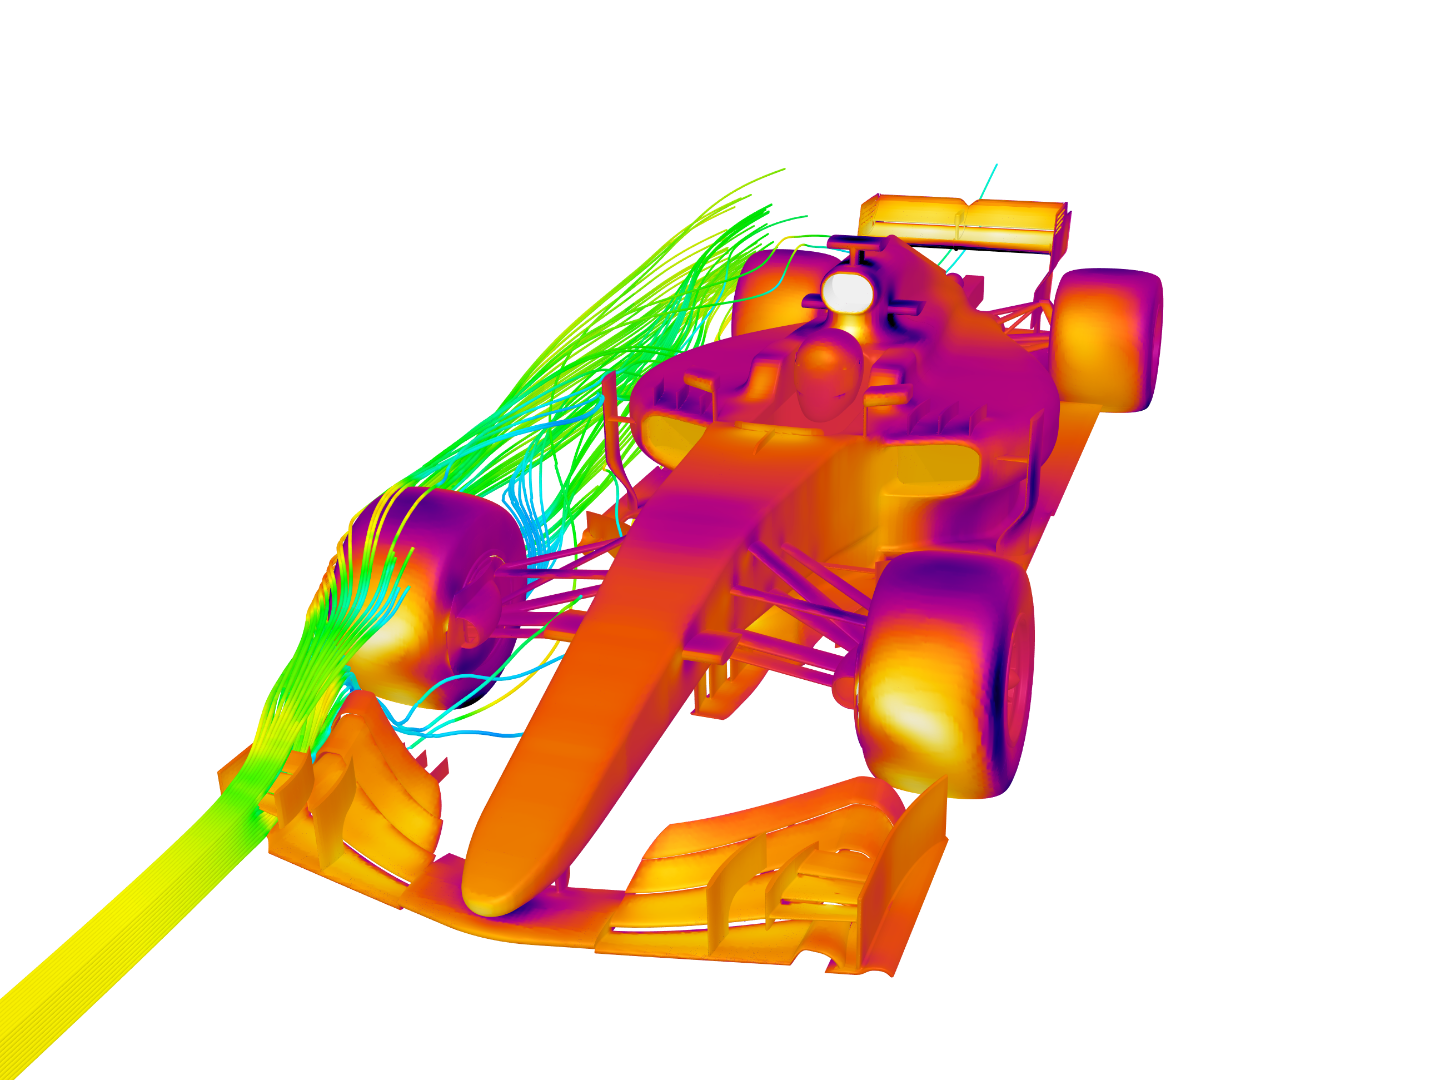 f1 aero test image